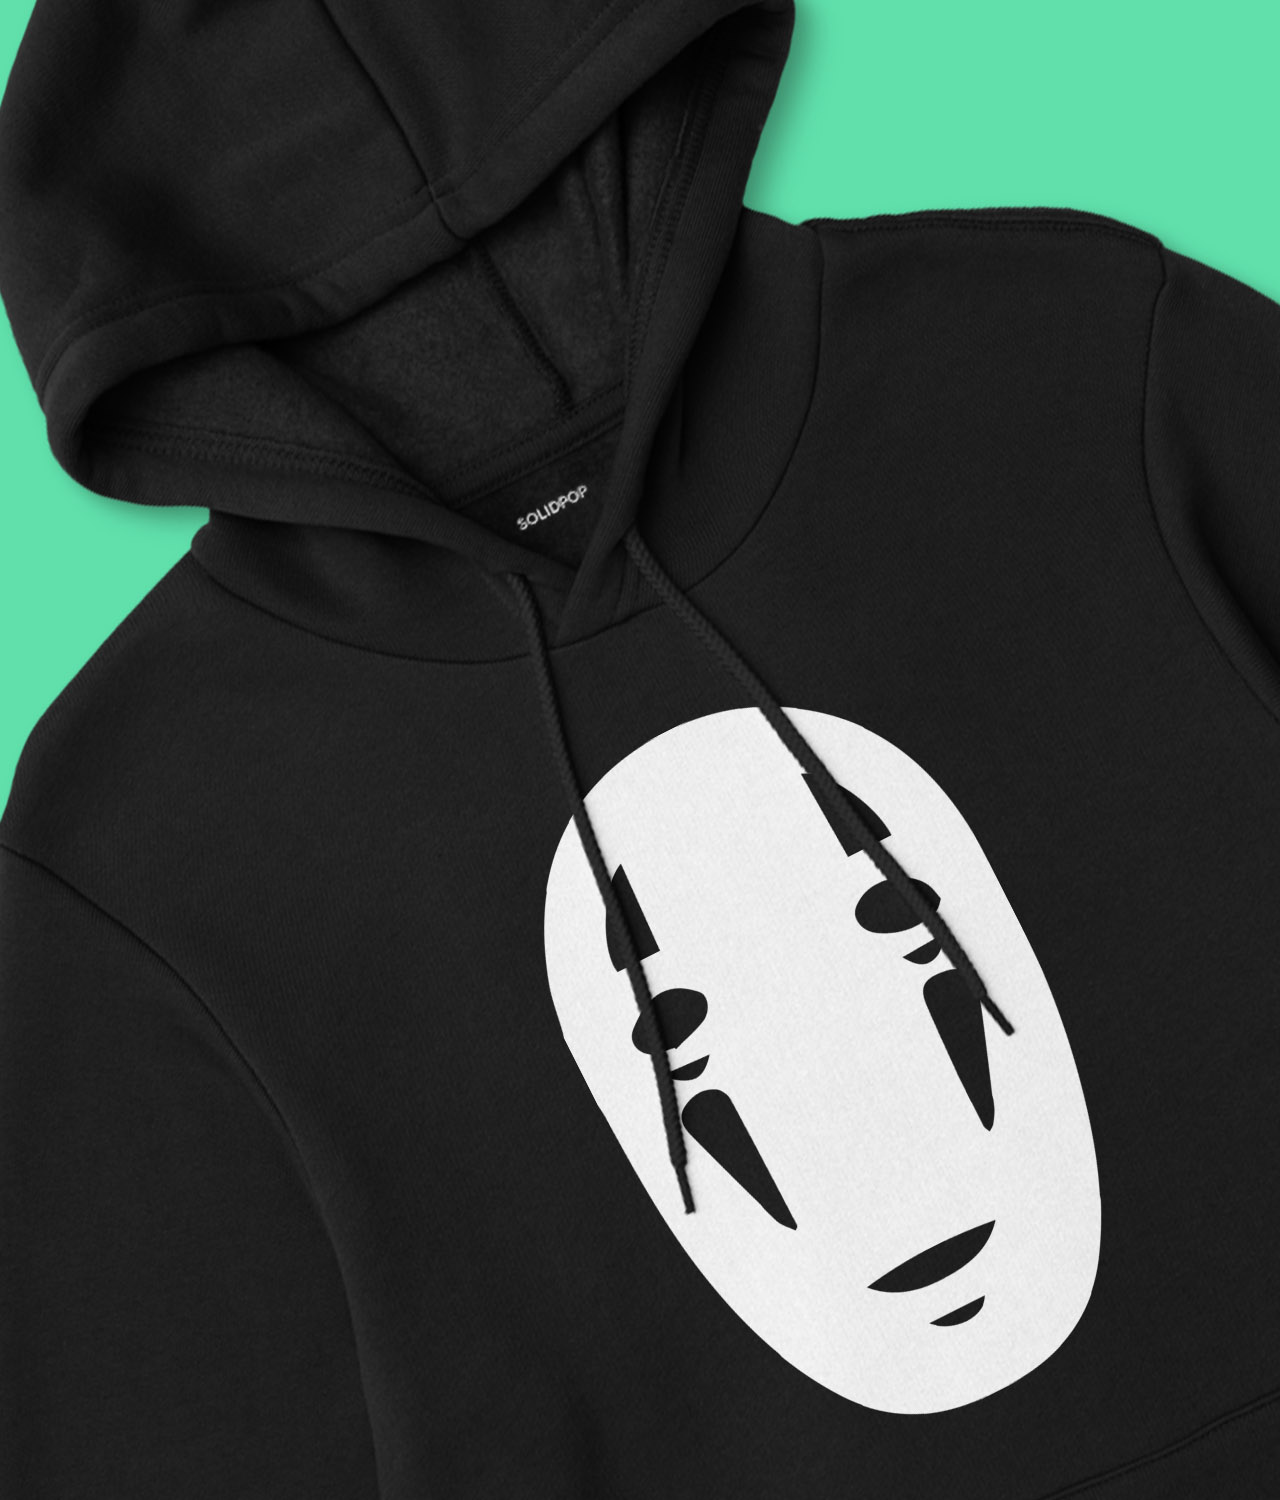 Spirited anime hoodie unisex cloth high quality hoodie hooded new gift